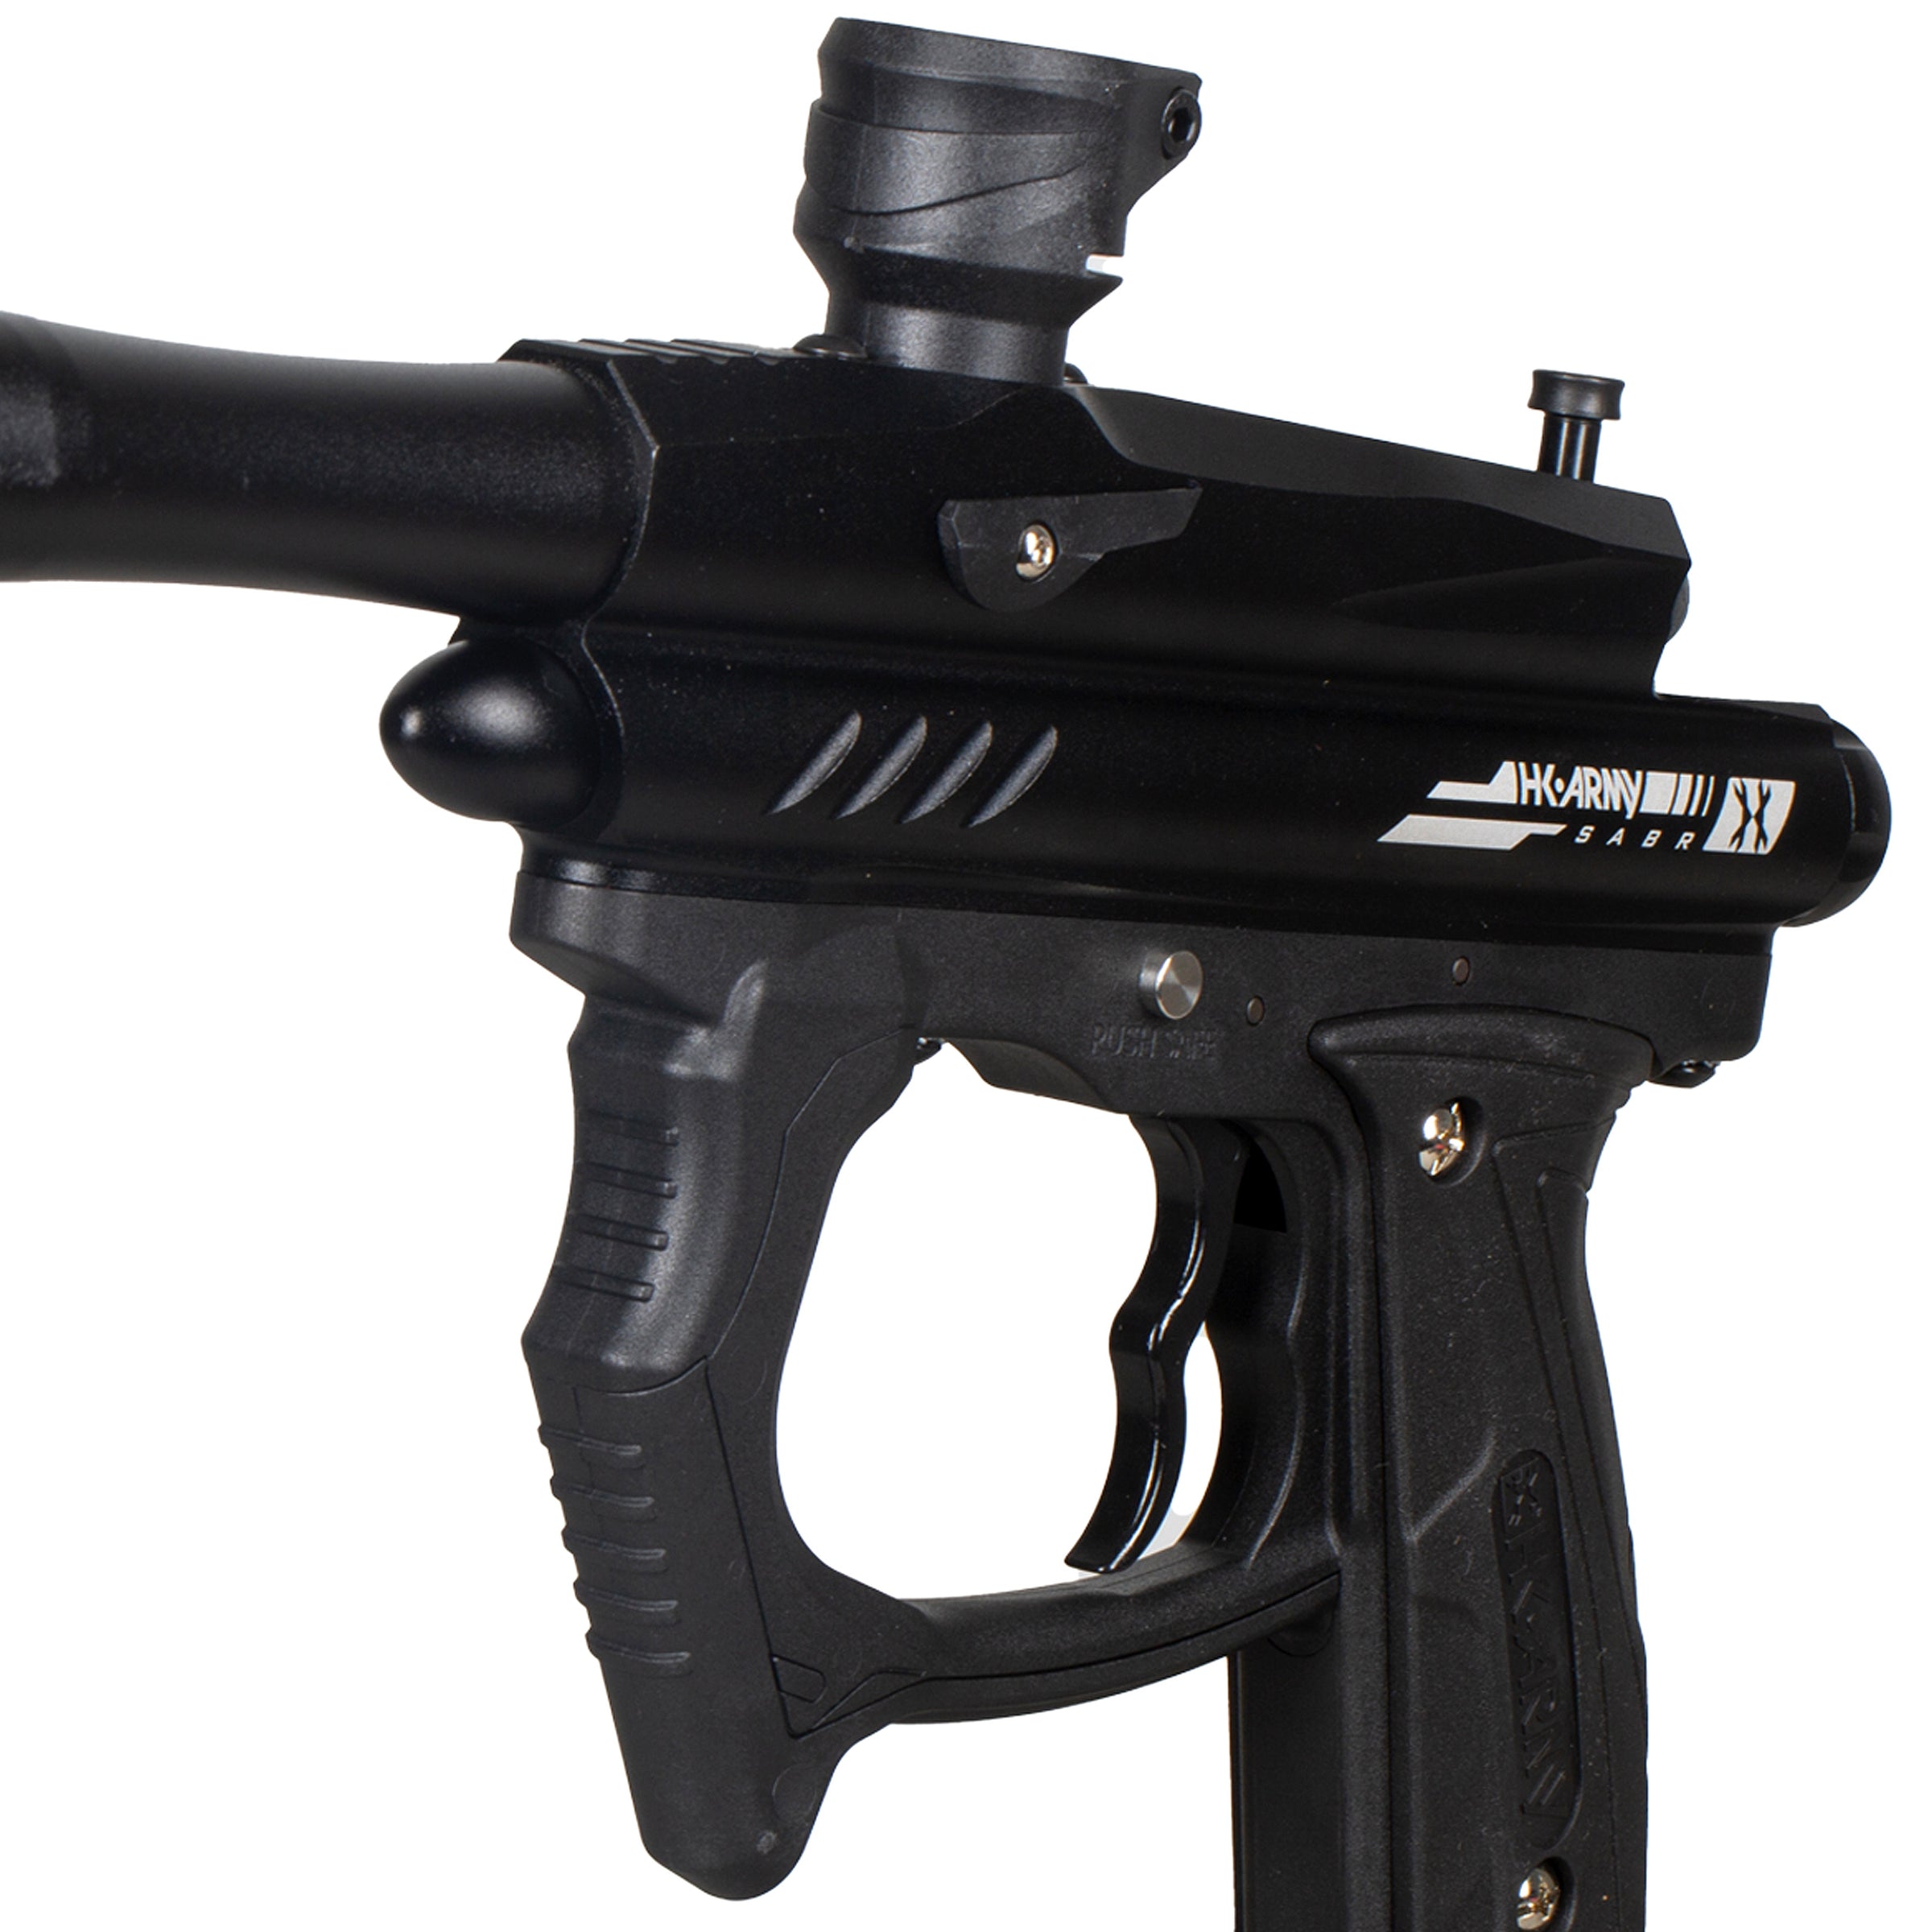 Finding The Right Paintball Gun - Blog